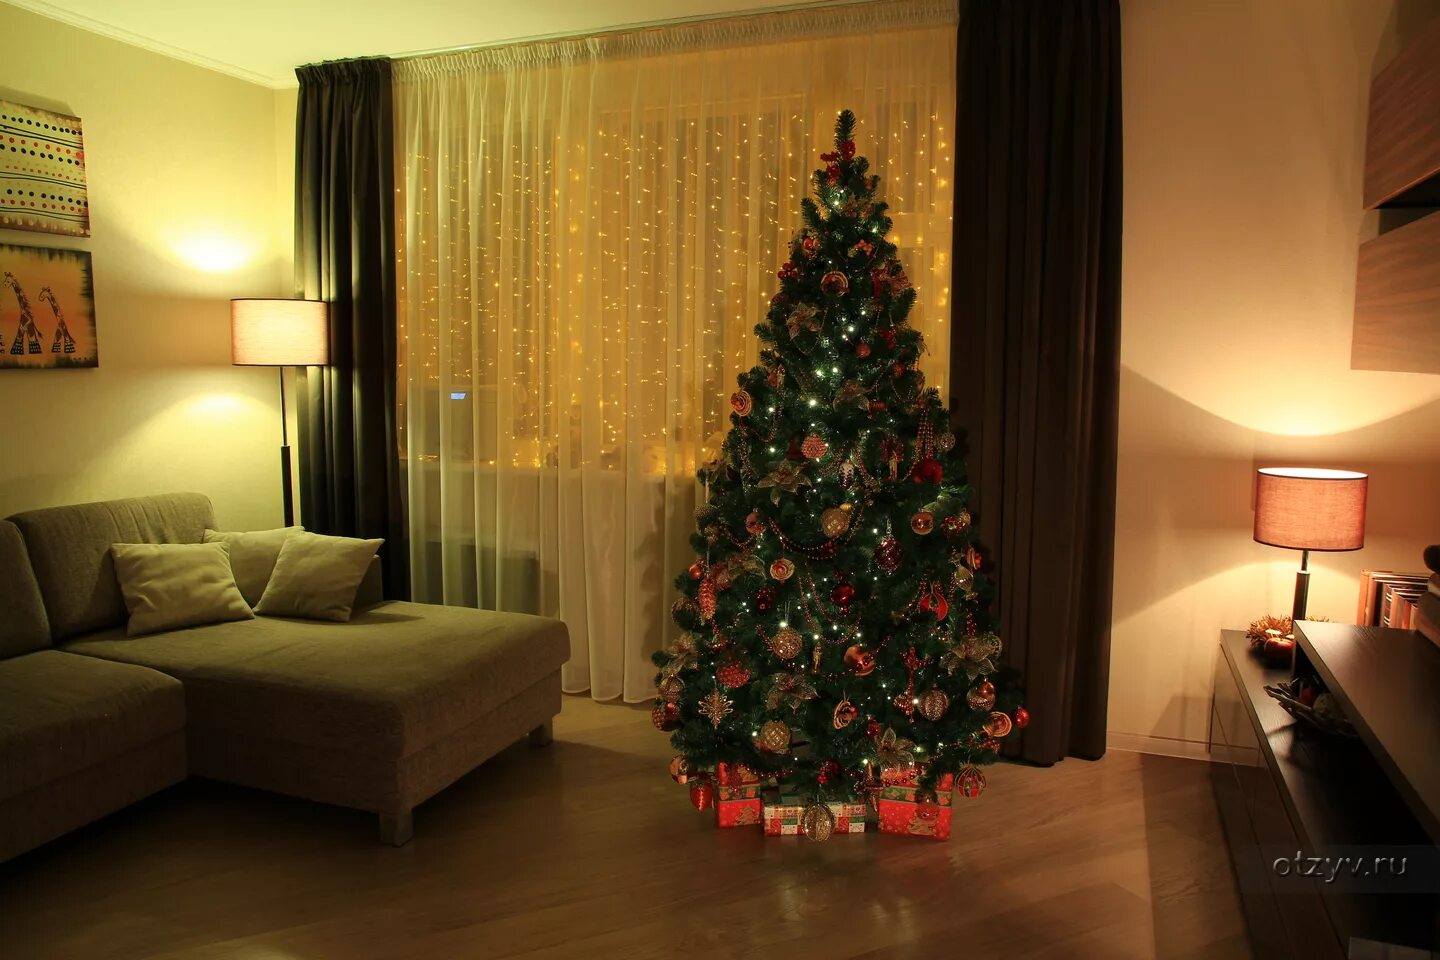 Посреди стояла красивая елка. Комната с елкой. Новогодняя елка в квартире. Красивая елка. Новогодний интерьер в квартире.